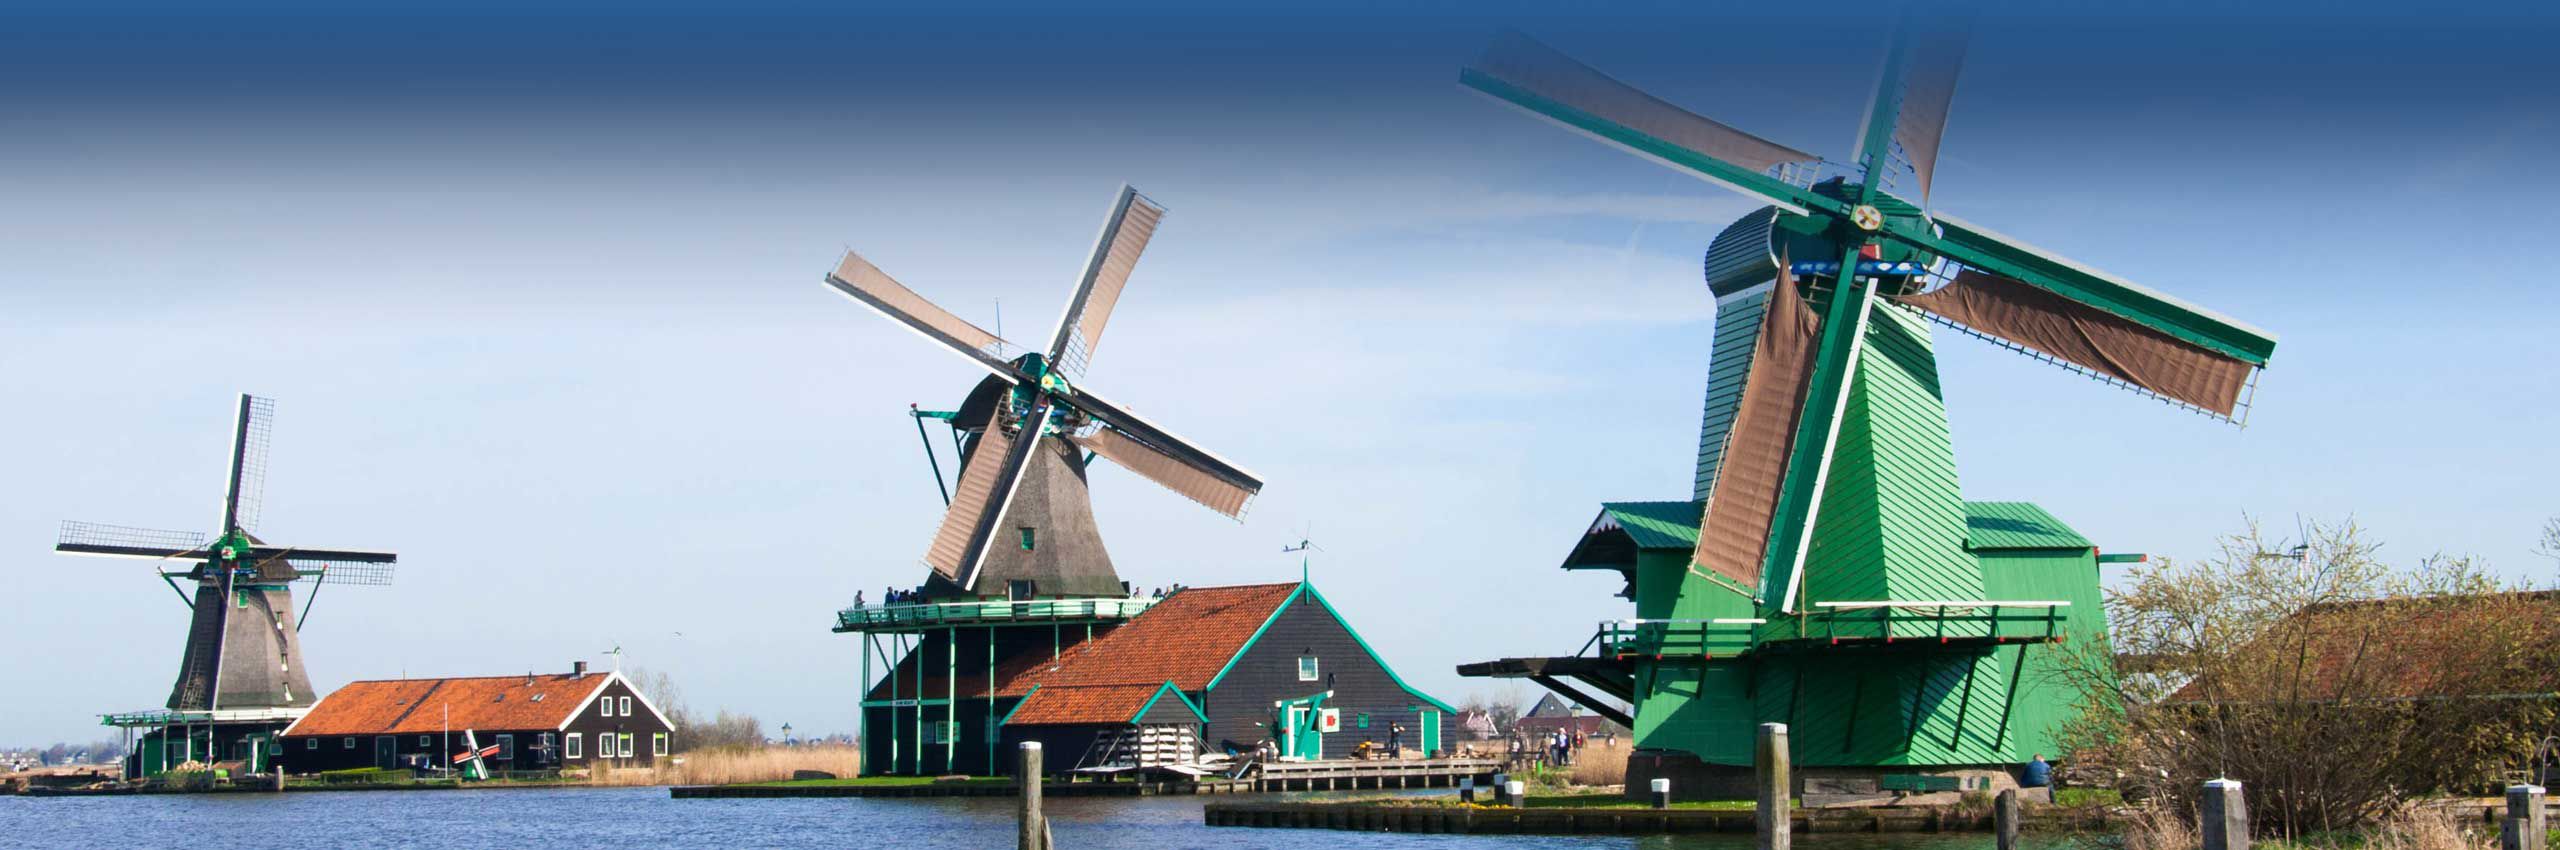 Windmill Village Holland